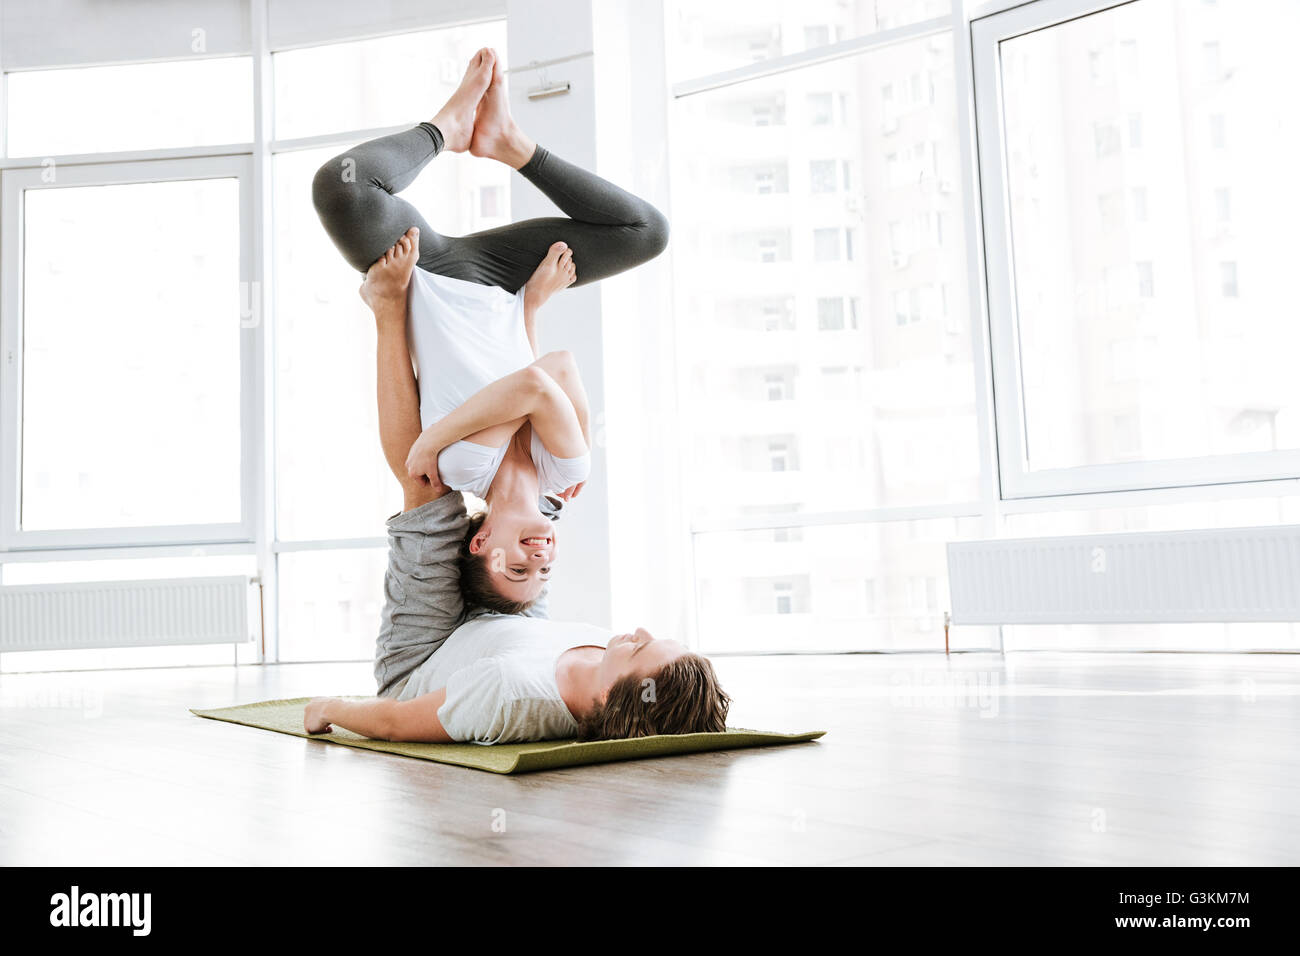 Advanced Partner Yoga Pose Couples Yoga 3d Illustration Stock Photo -  Download Image Now - iStock